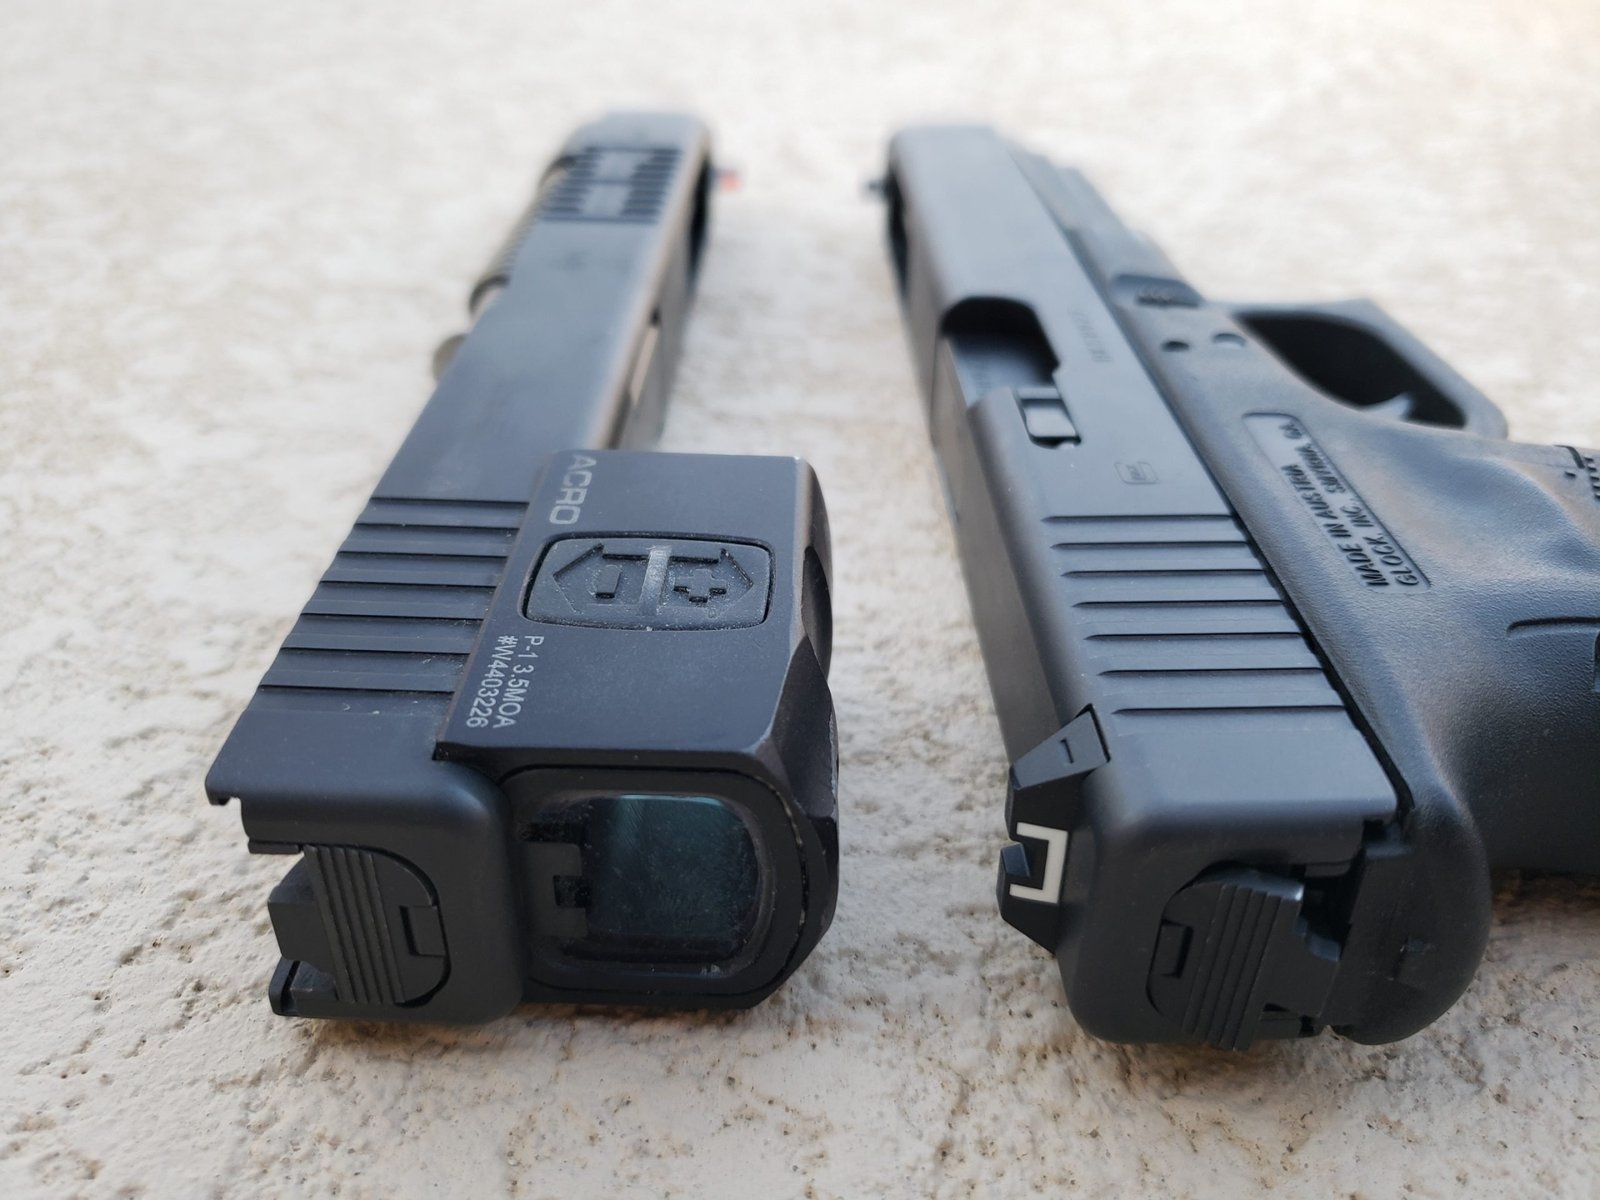 optics versus irons on pistols